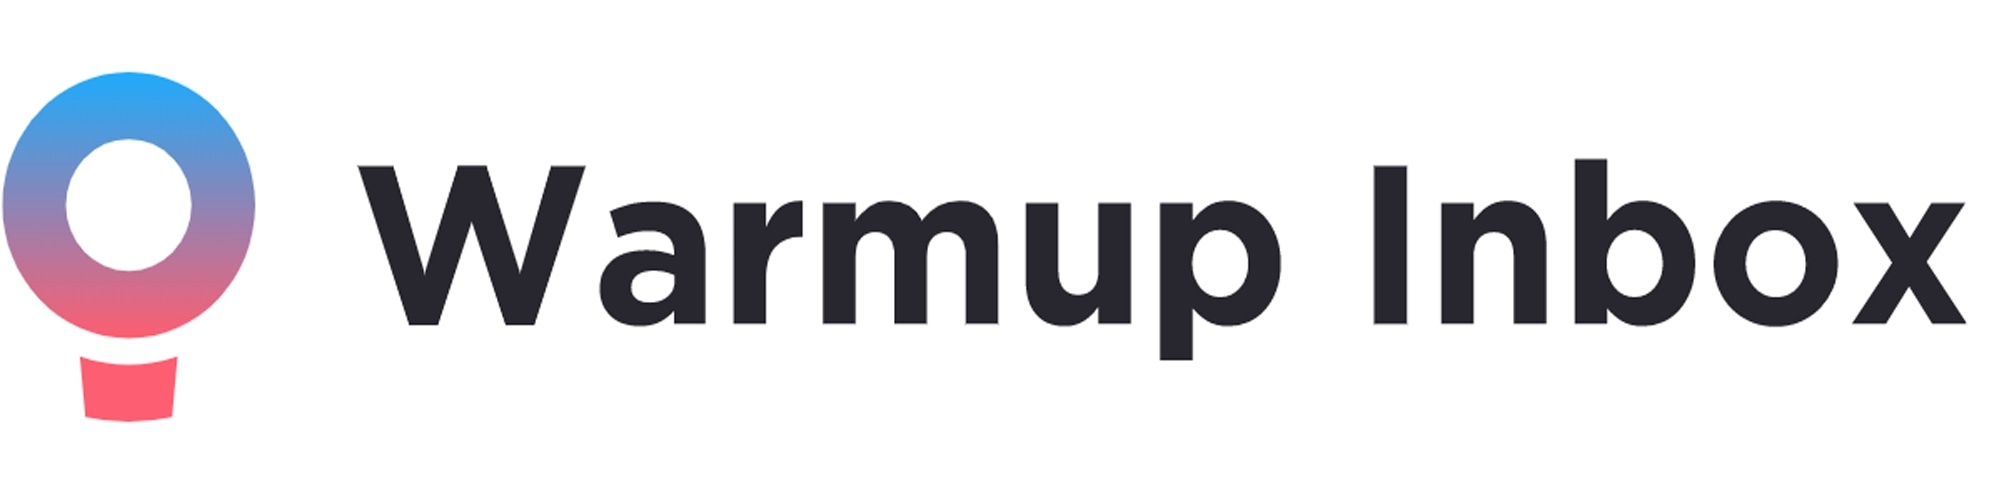 Warmup inbox logo